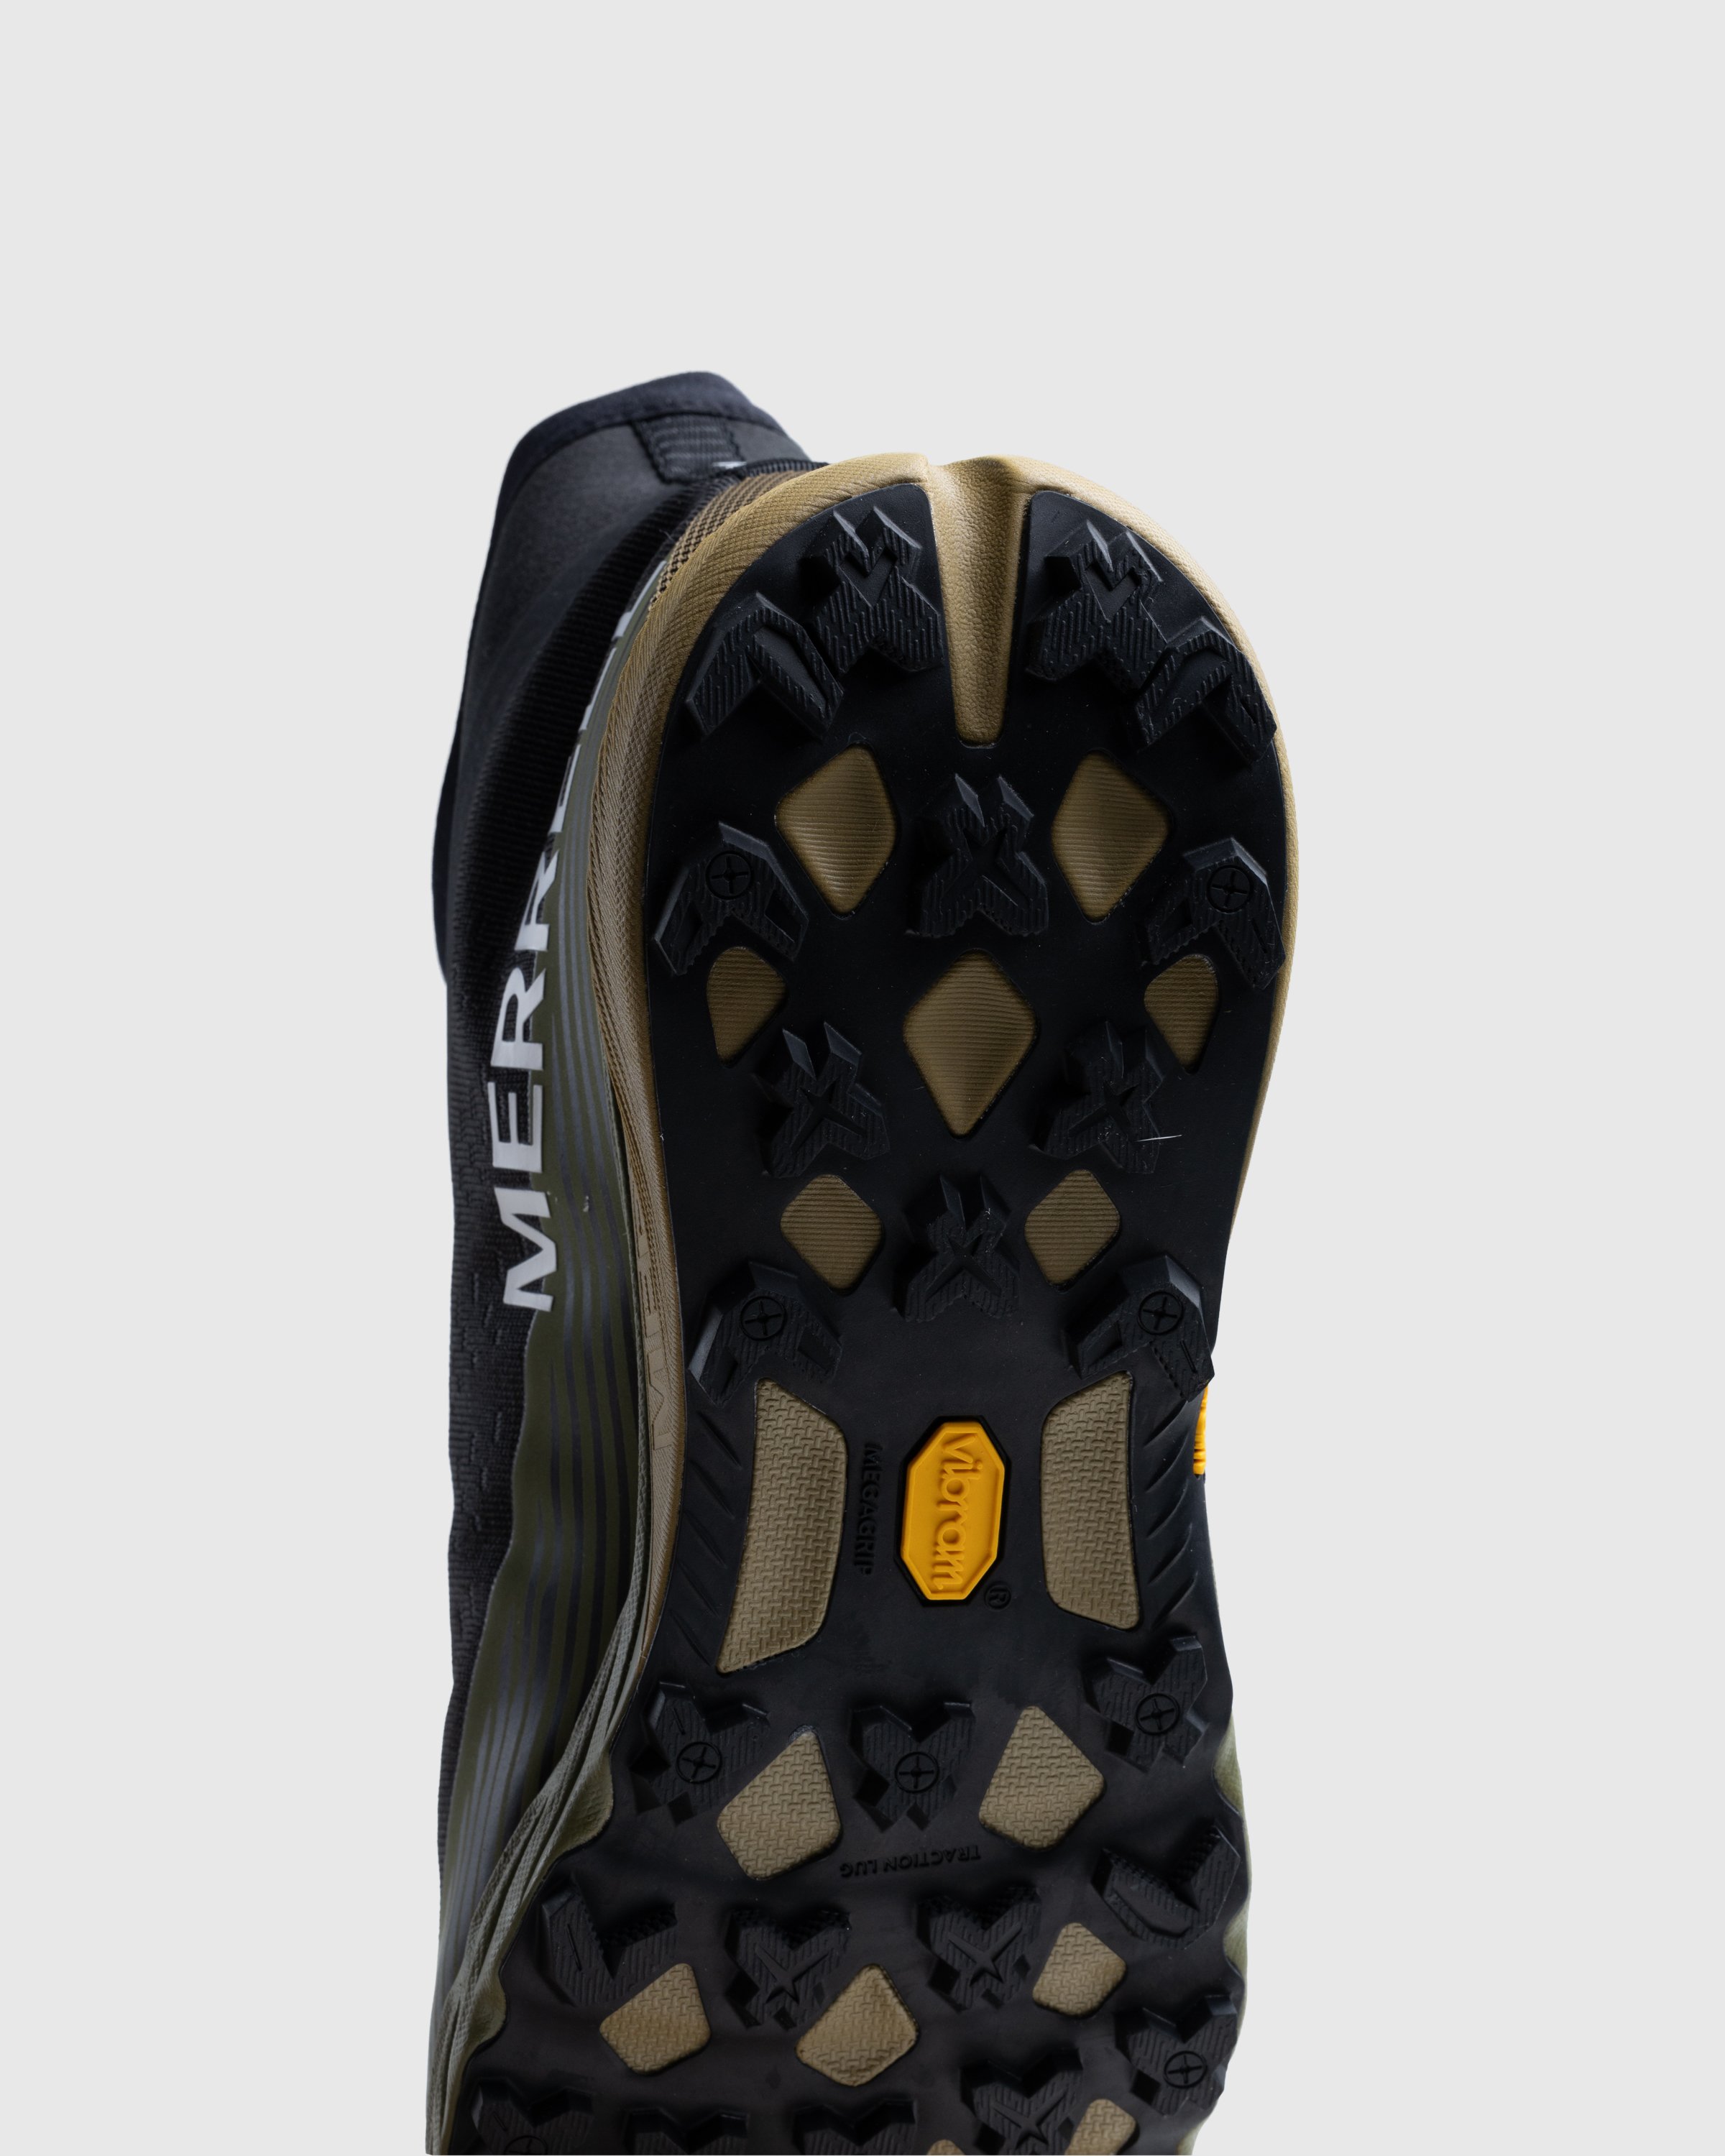 Merrell - Agility Peak 5 Zero GORE-TEX Black/Avocado - Footwear - Multi - Image 6